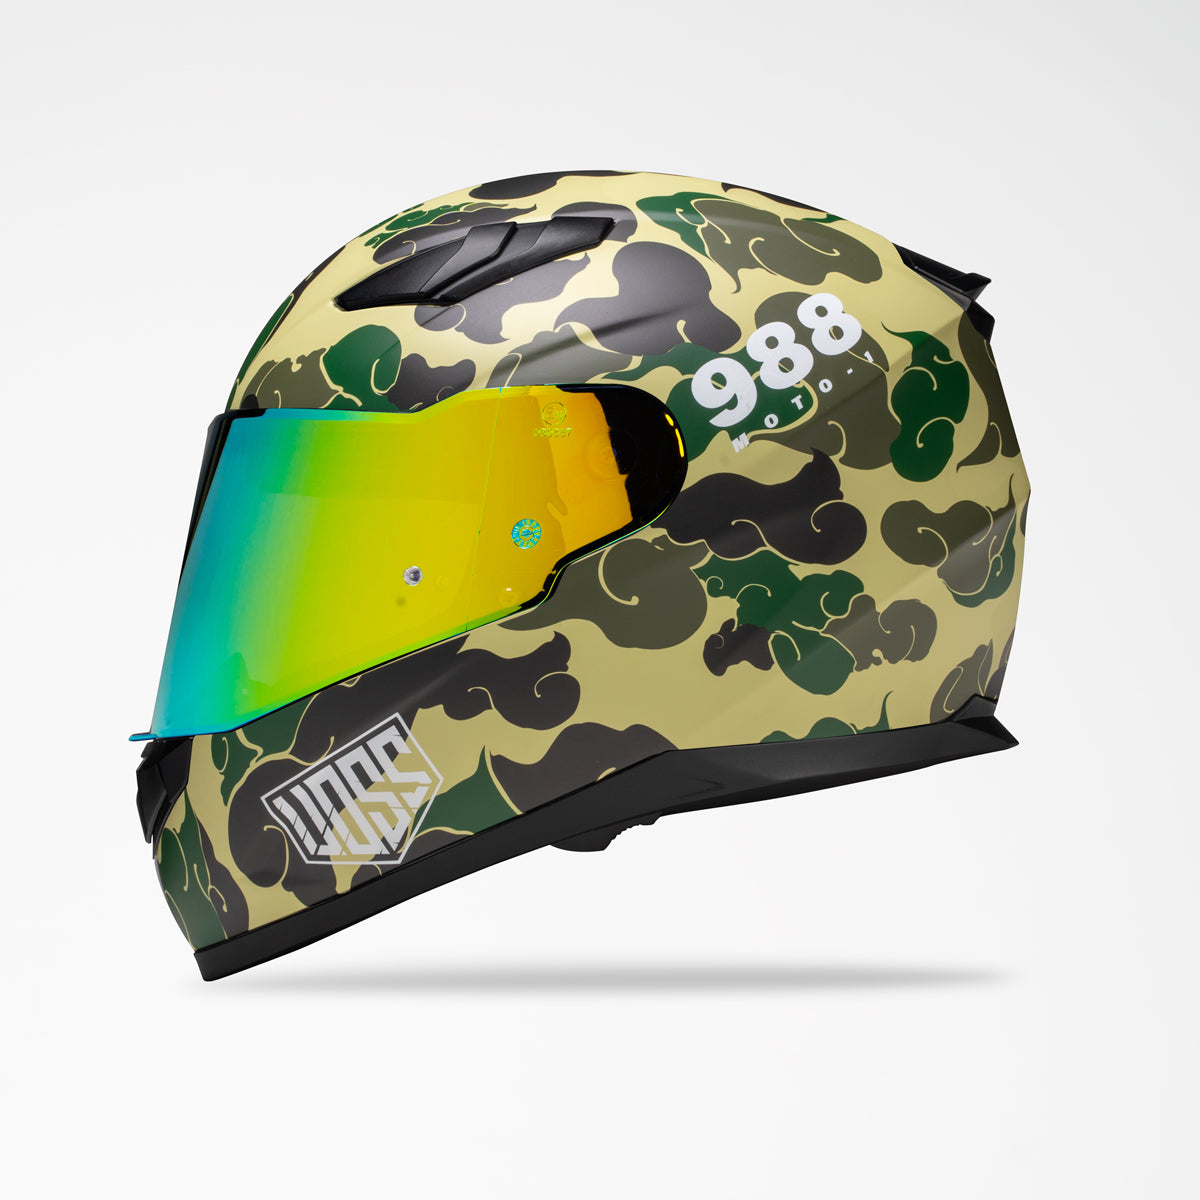 VOSS 988 MOTO-1 GREEN CAMO HELMET - Voss Helmets